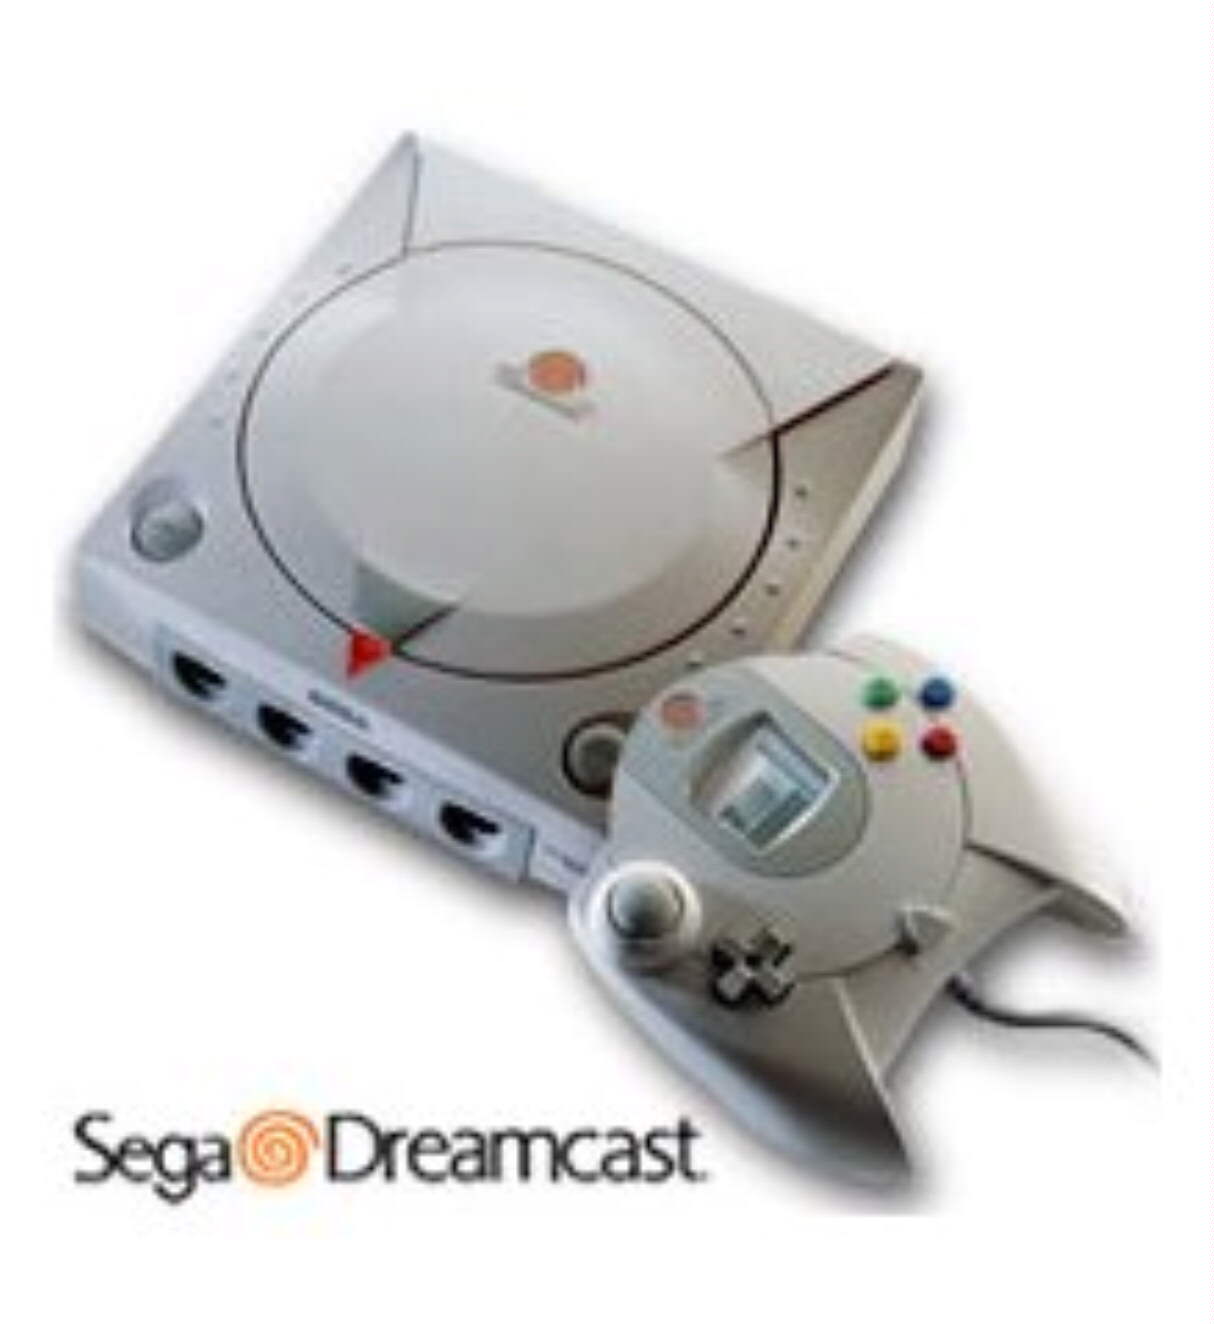 Dreamcast+CONSOLE.jpg